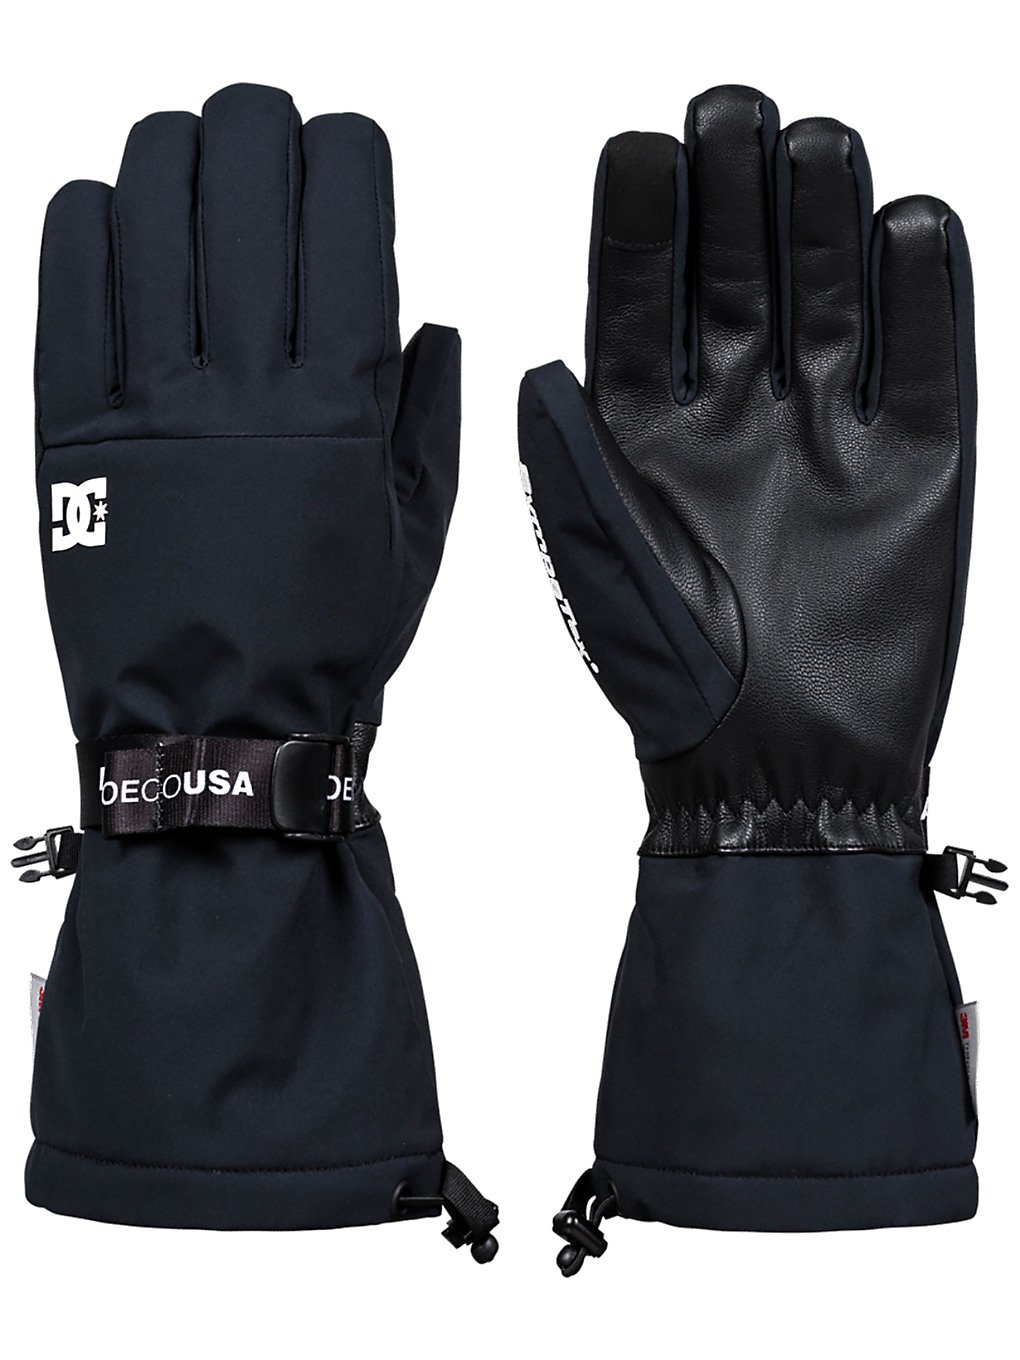 DC Legion 30K Sympatex Gloves noir